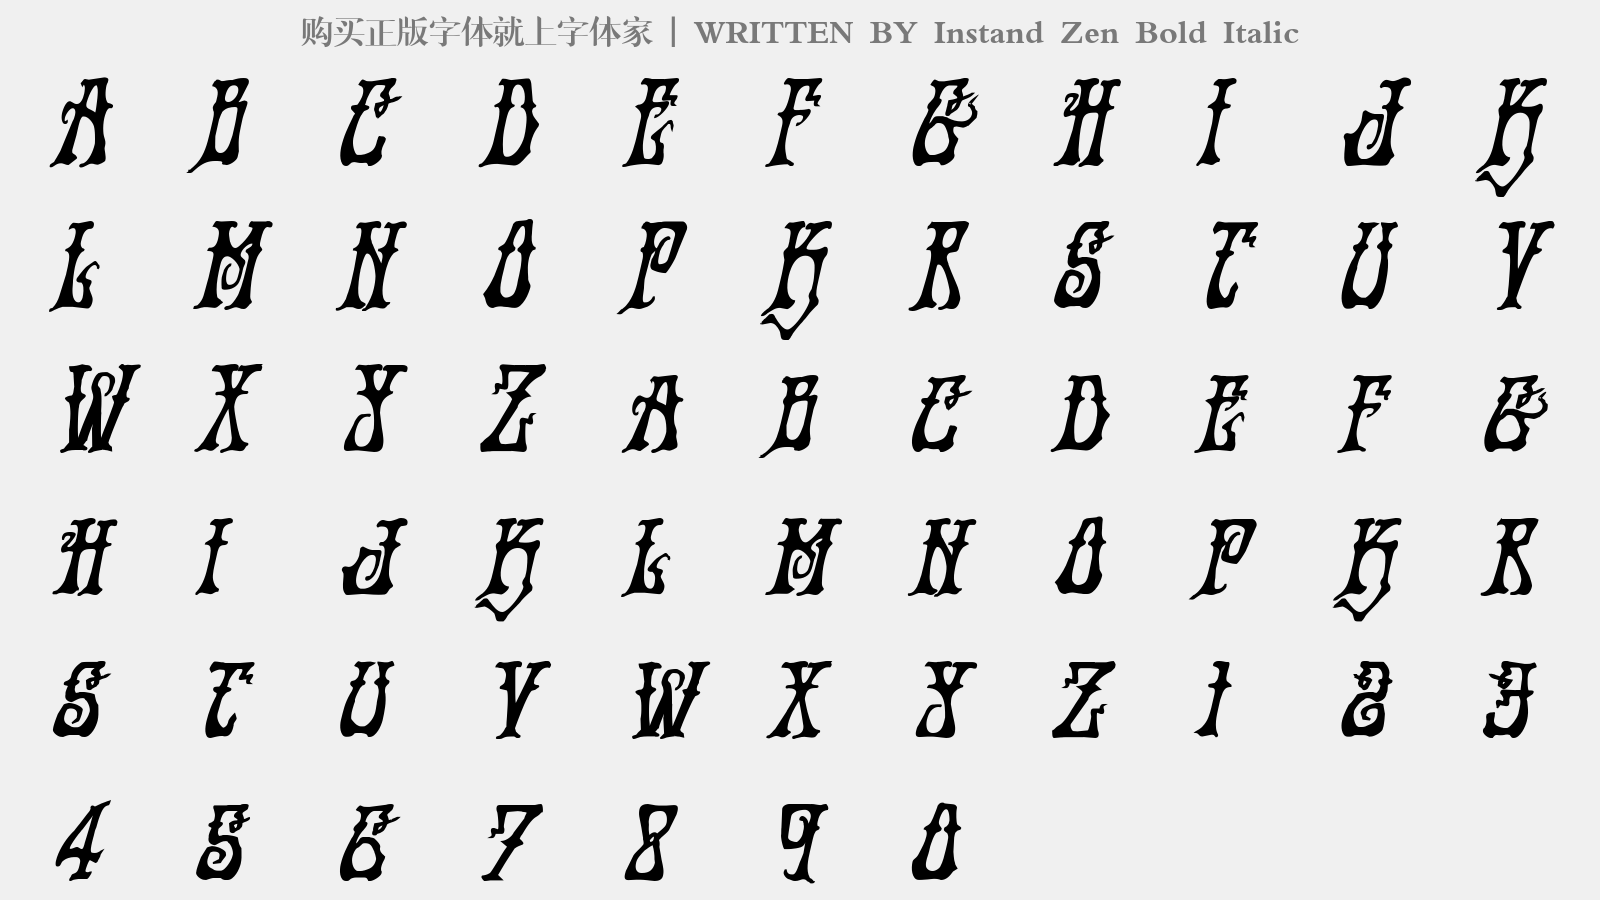 Instand Zen Bold Italic - 大写字母/小写字母/数字